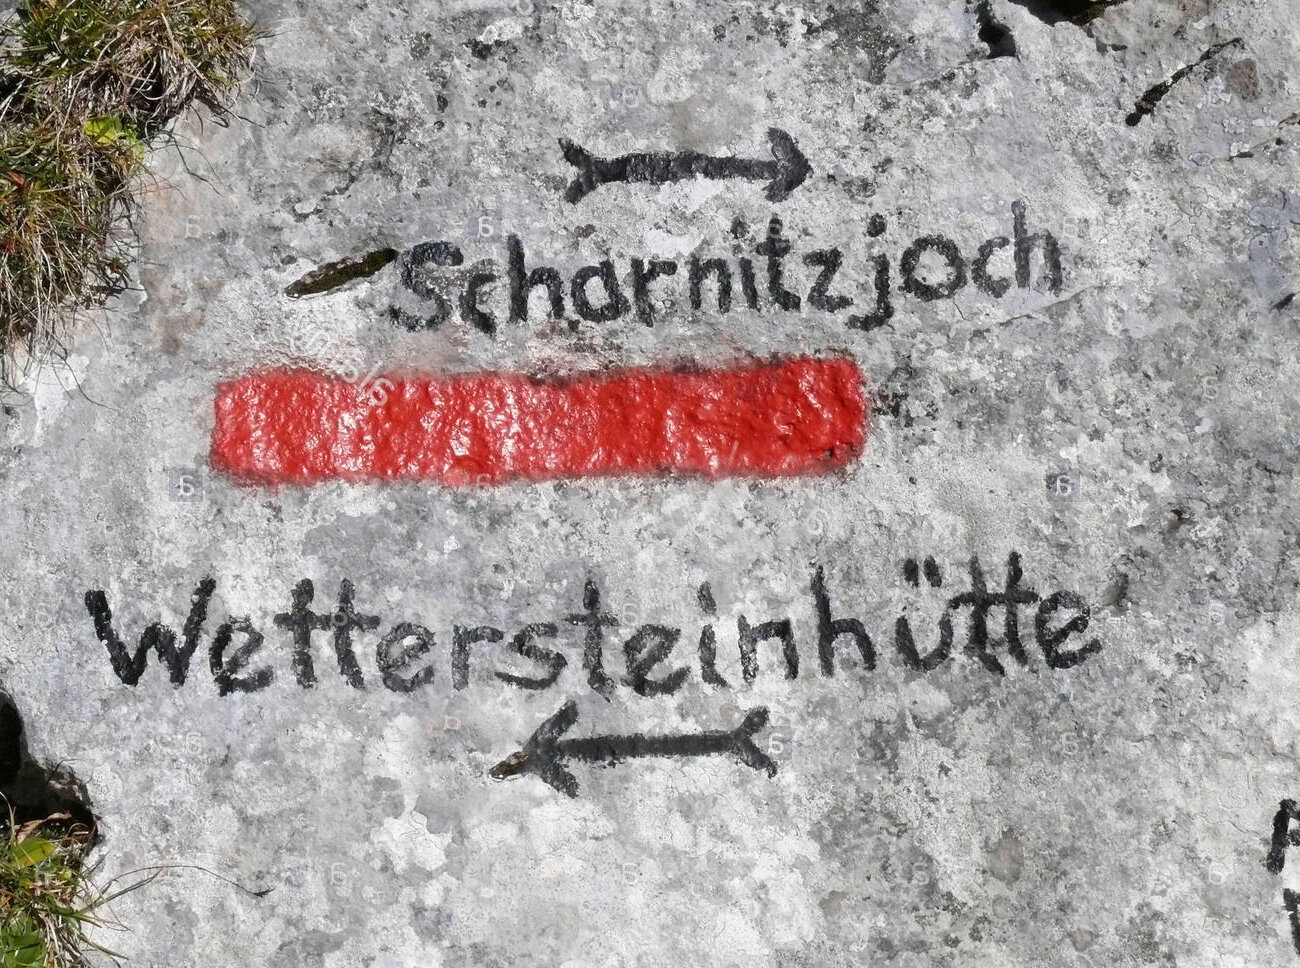 austria-tyrol-weather-stone-mountains-rocks-signposts-scharnitzjoch-weather-stone-cottage-mountain-mountains-weather-stone-alps-region-alps-nature-summits-stone-roc.jpg